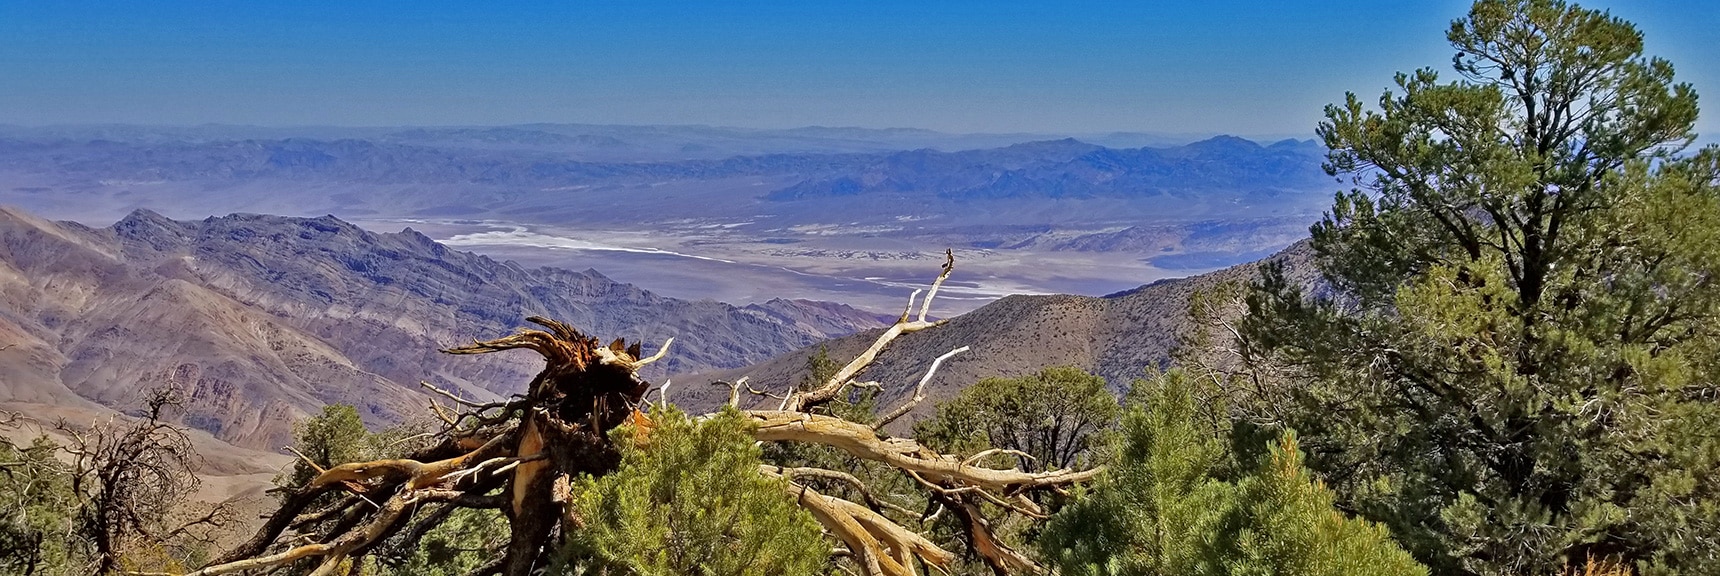 View of Furnace Creek Area from Just Below Wildrose Peak Summit | Wildrose Peak | Panamint Mountain Range | Death Valley National Park, California